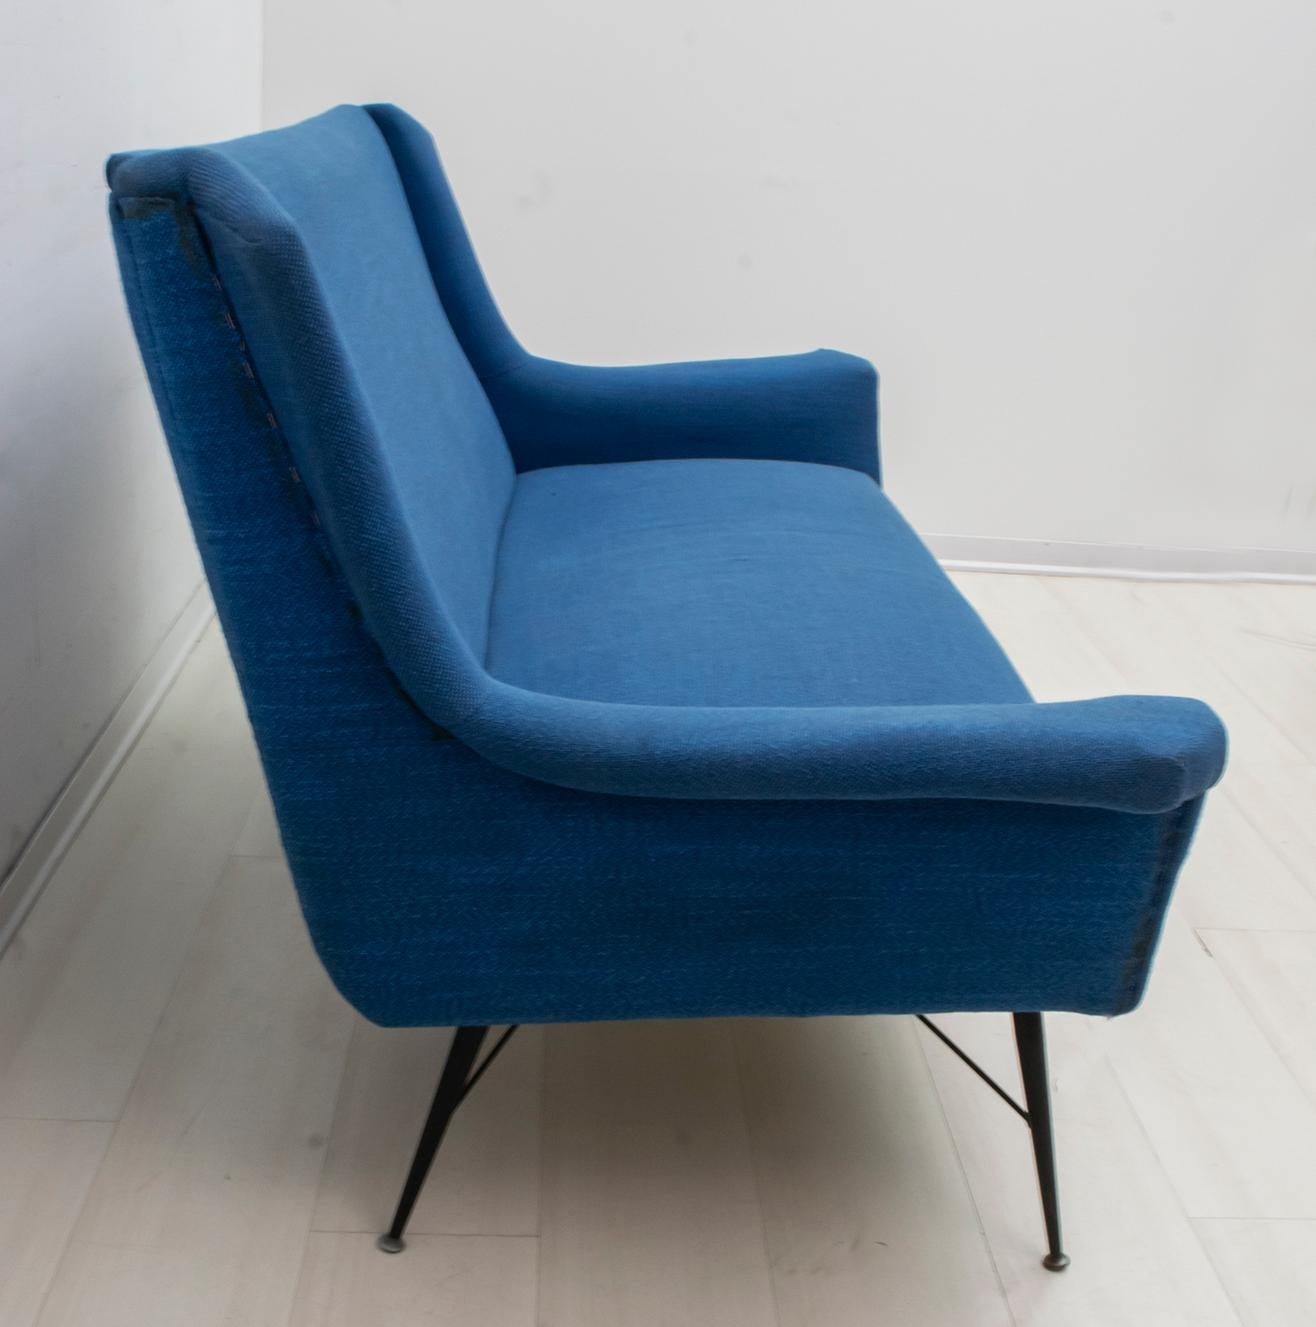 Mid-20th Century Gigi Radice Mid-Century Modern Italian Sofa for Minotti, 1950s